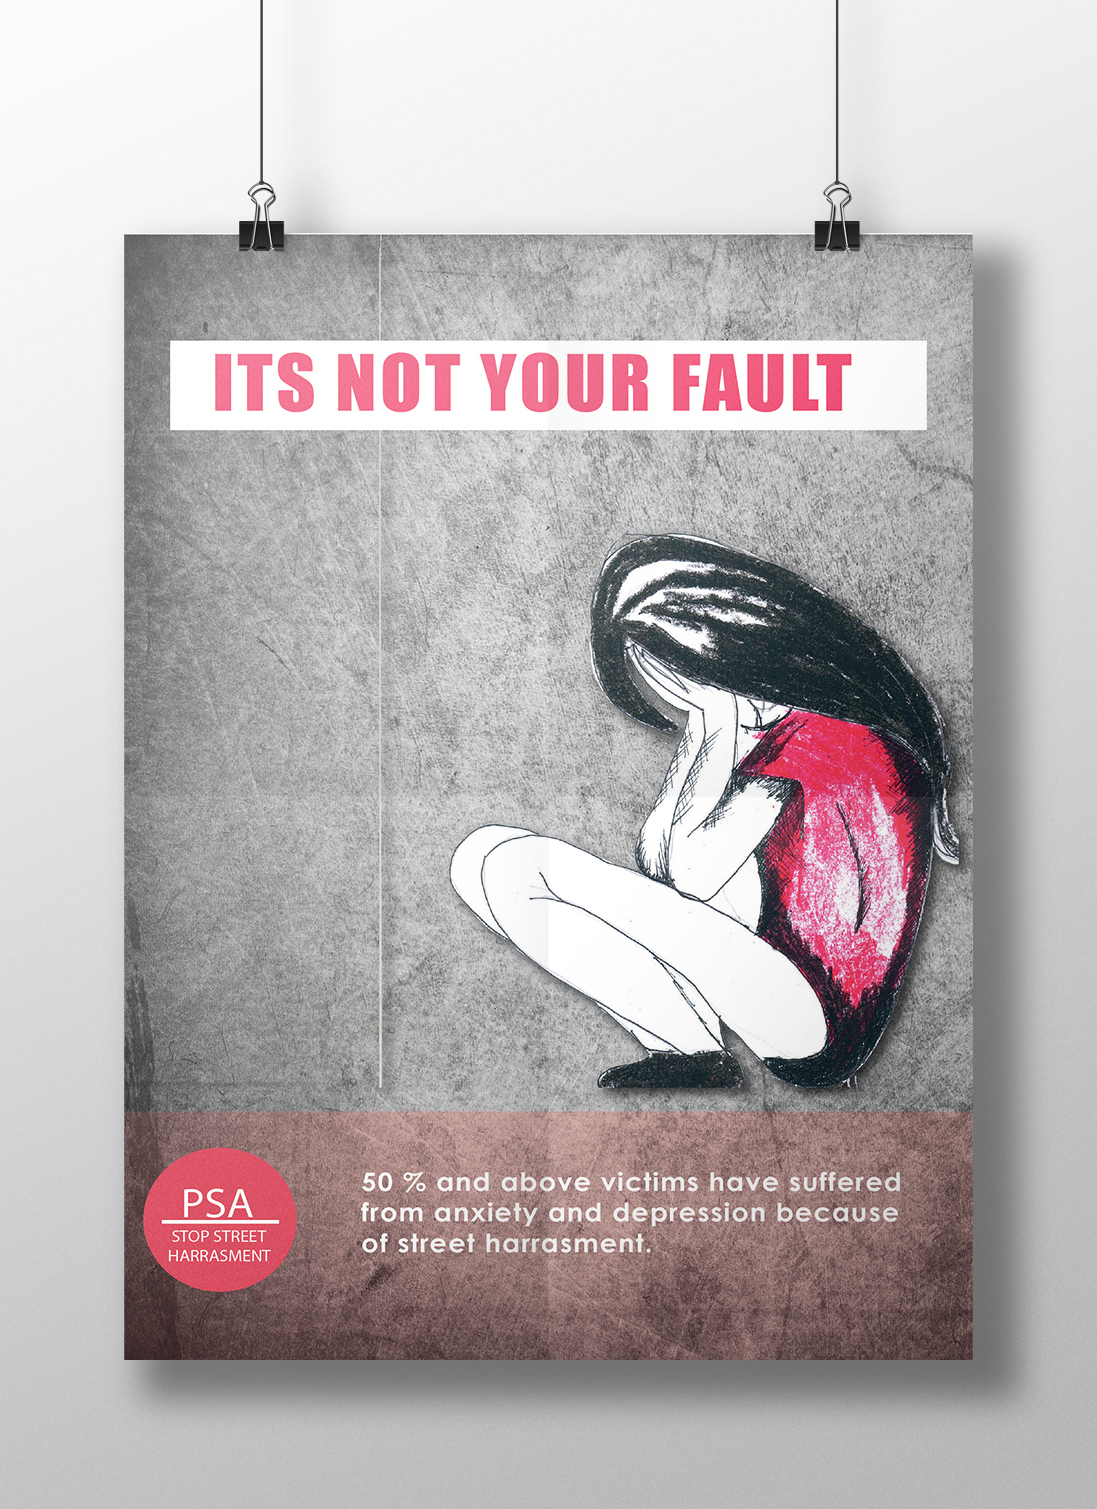 ad campaign ILLUSTRATION  Advertising  WOMEN HARASSMENT stop street harassment